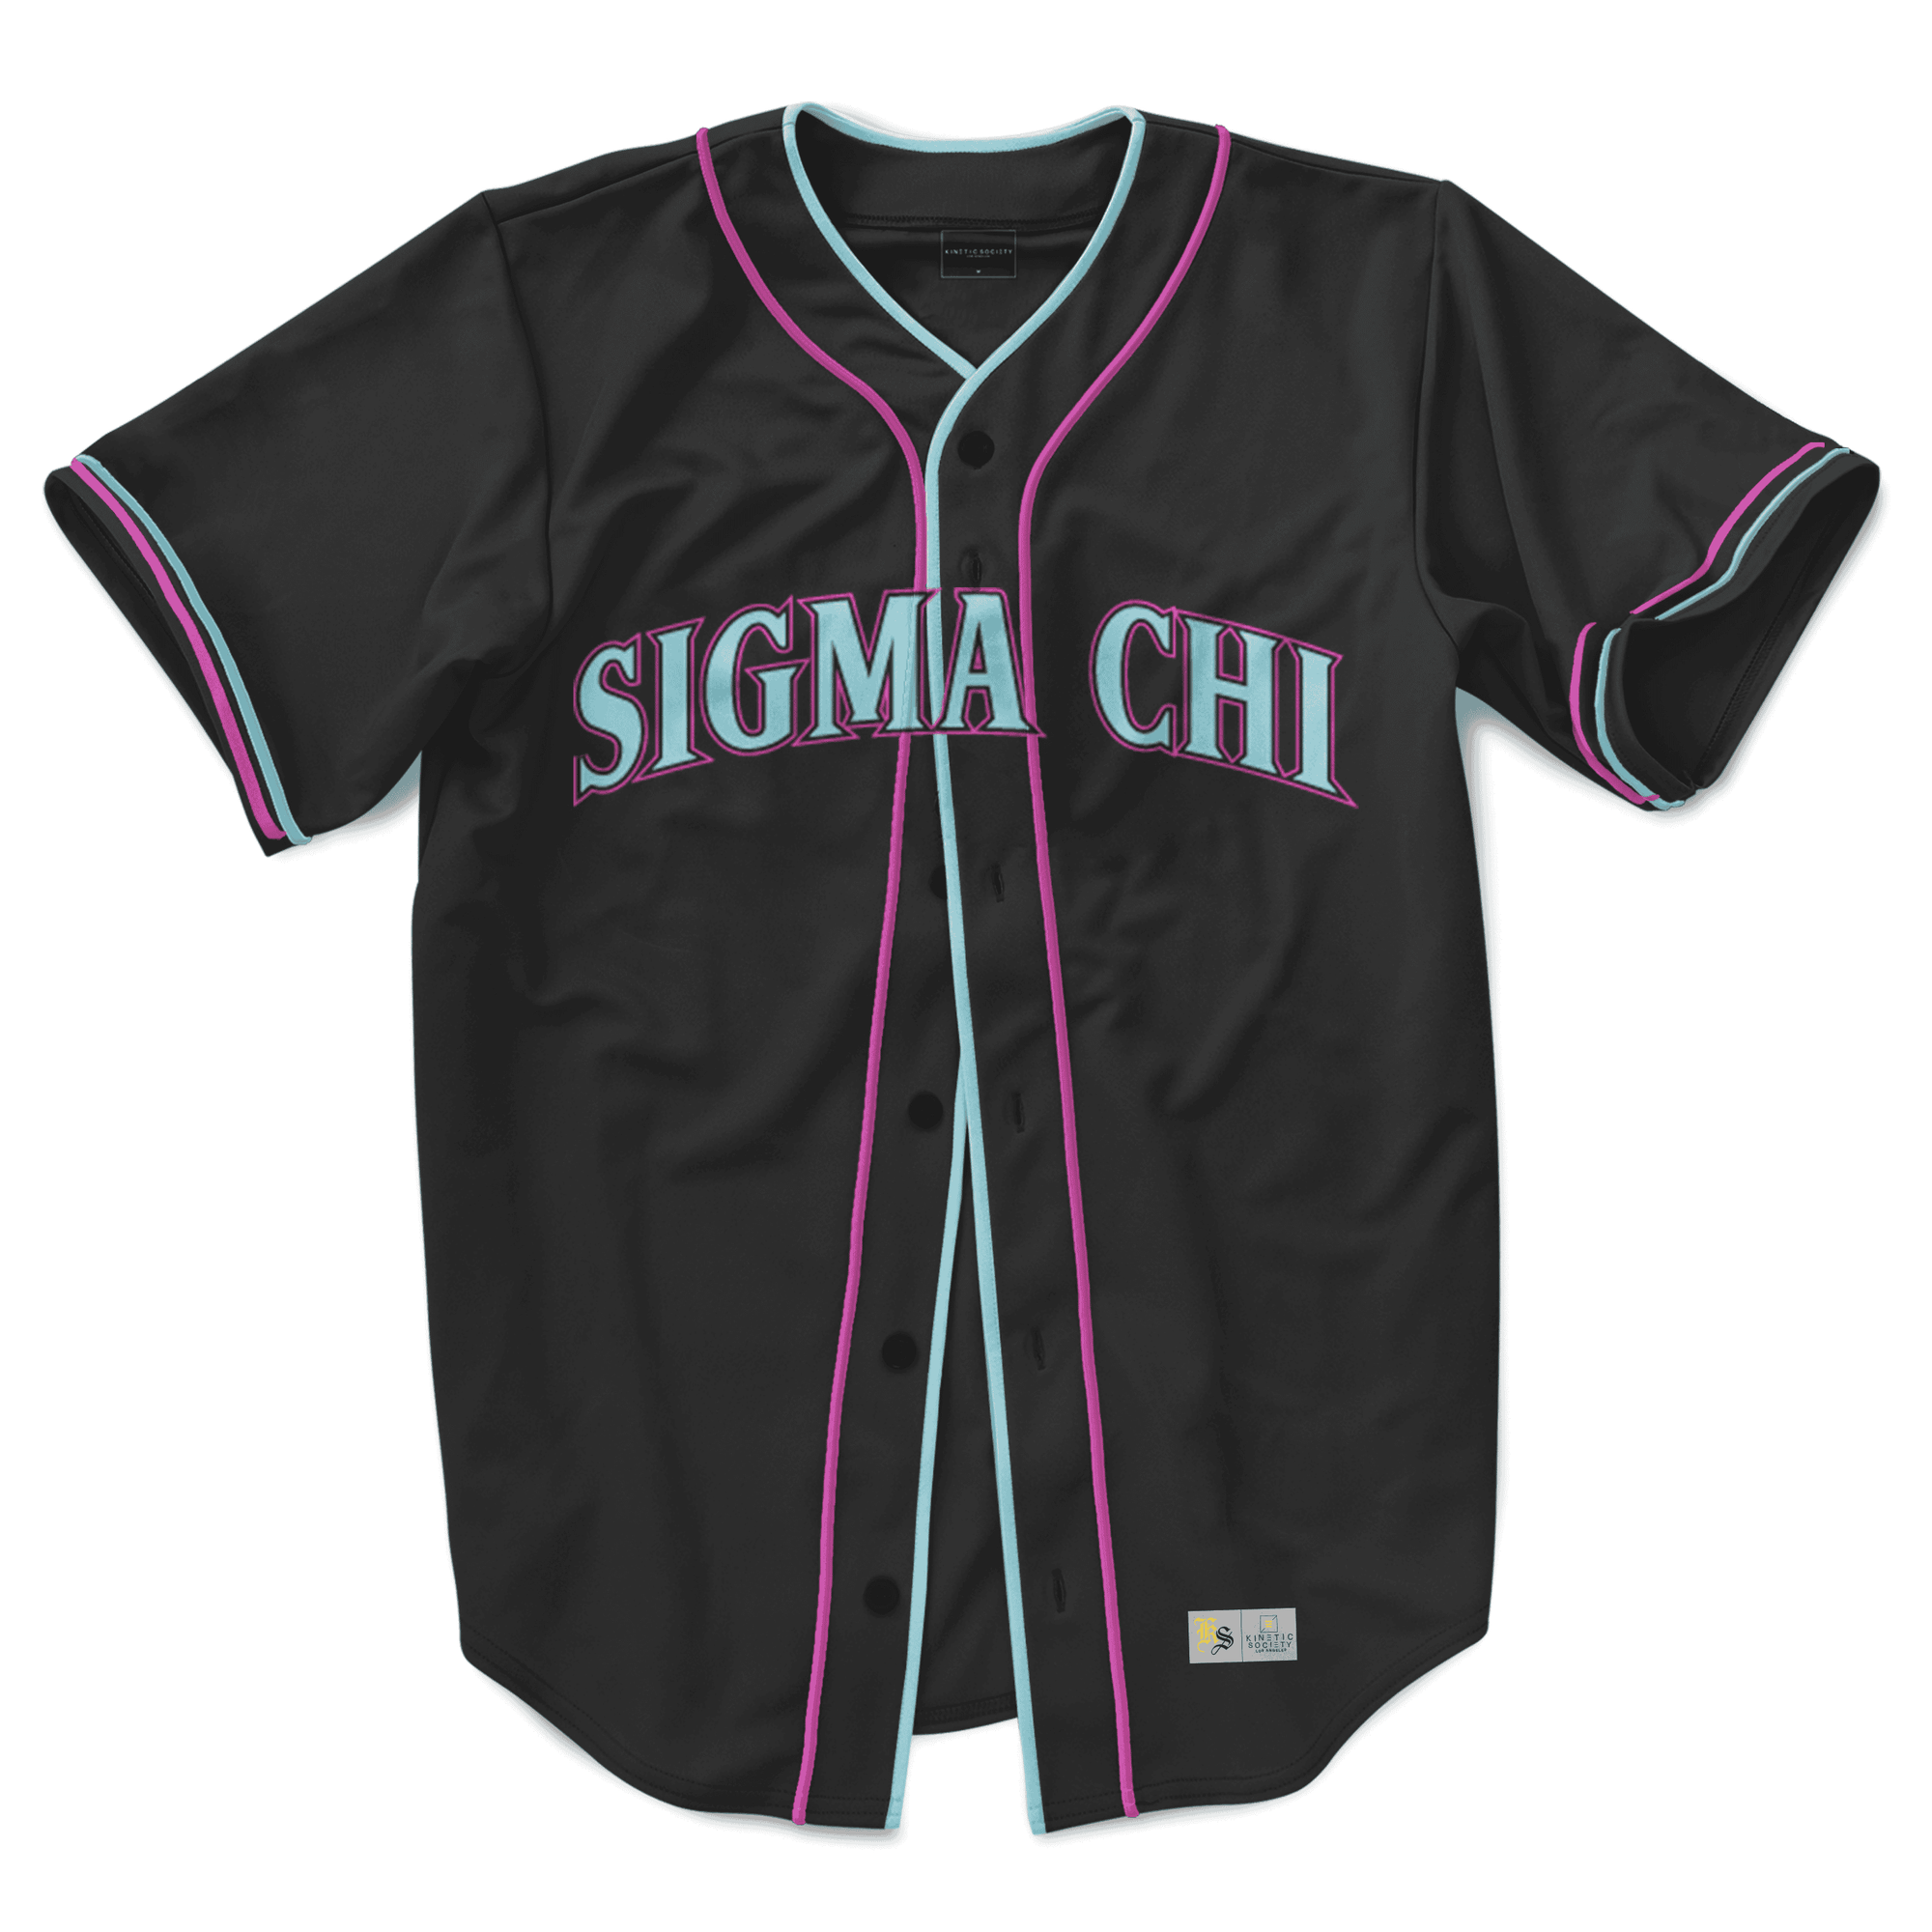 Sigma Chi - Neo Nightlife Baseball Jersey